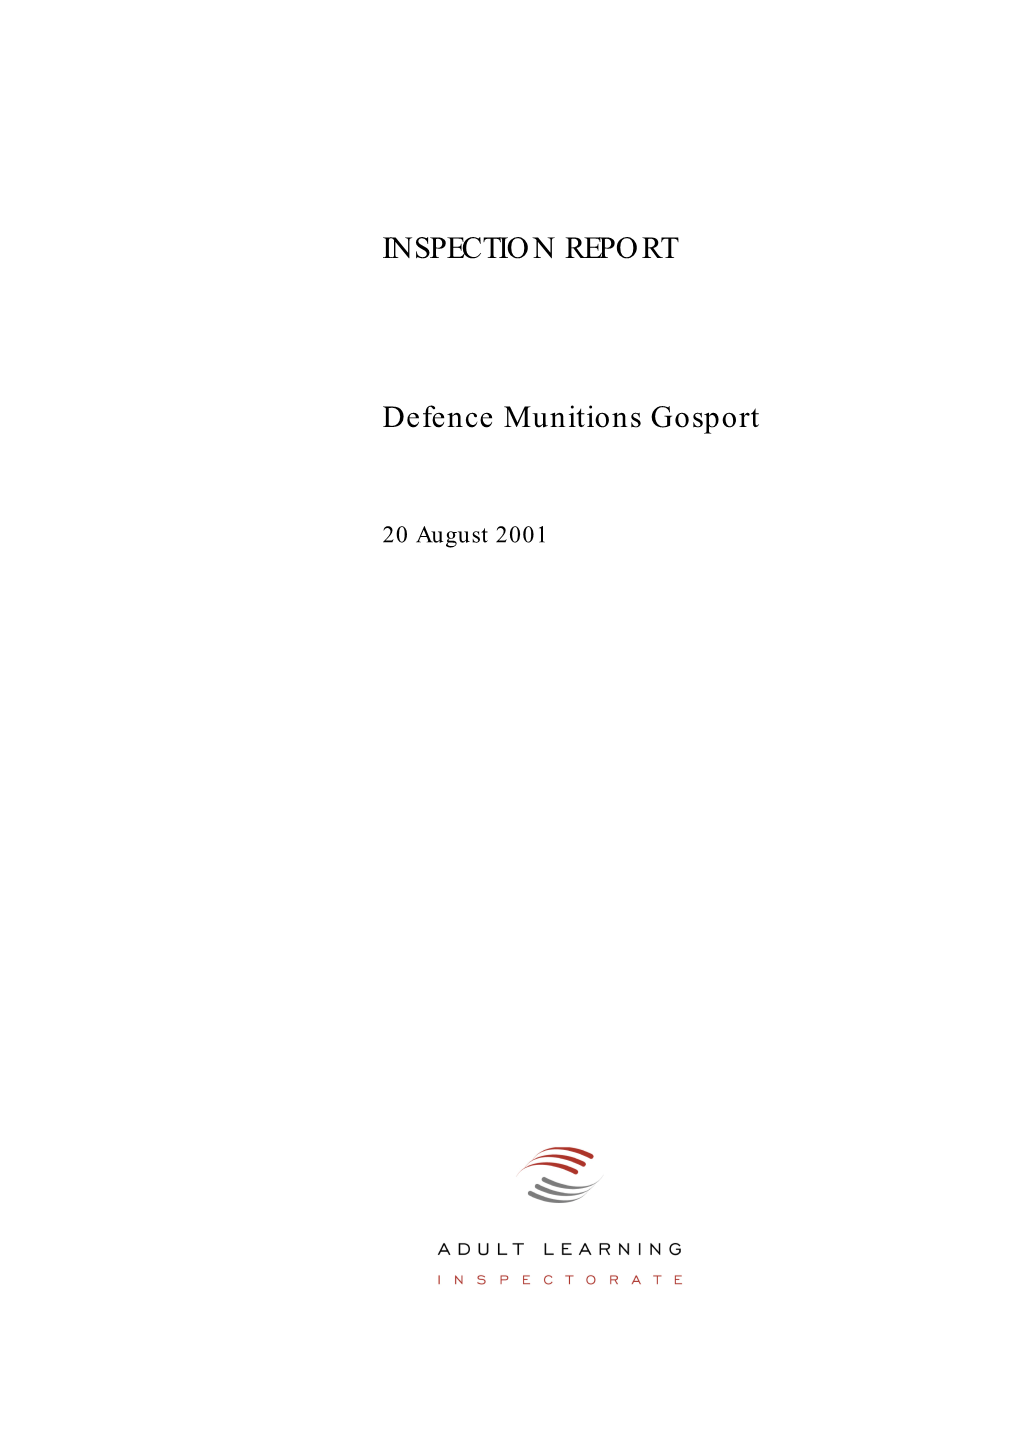 Defence Munitions Gosport INSPECTION REPORT